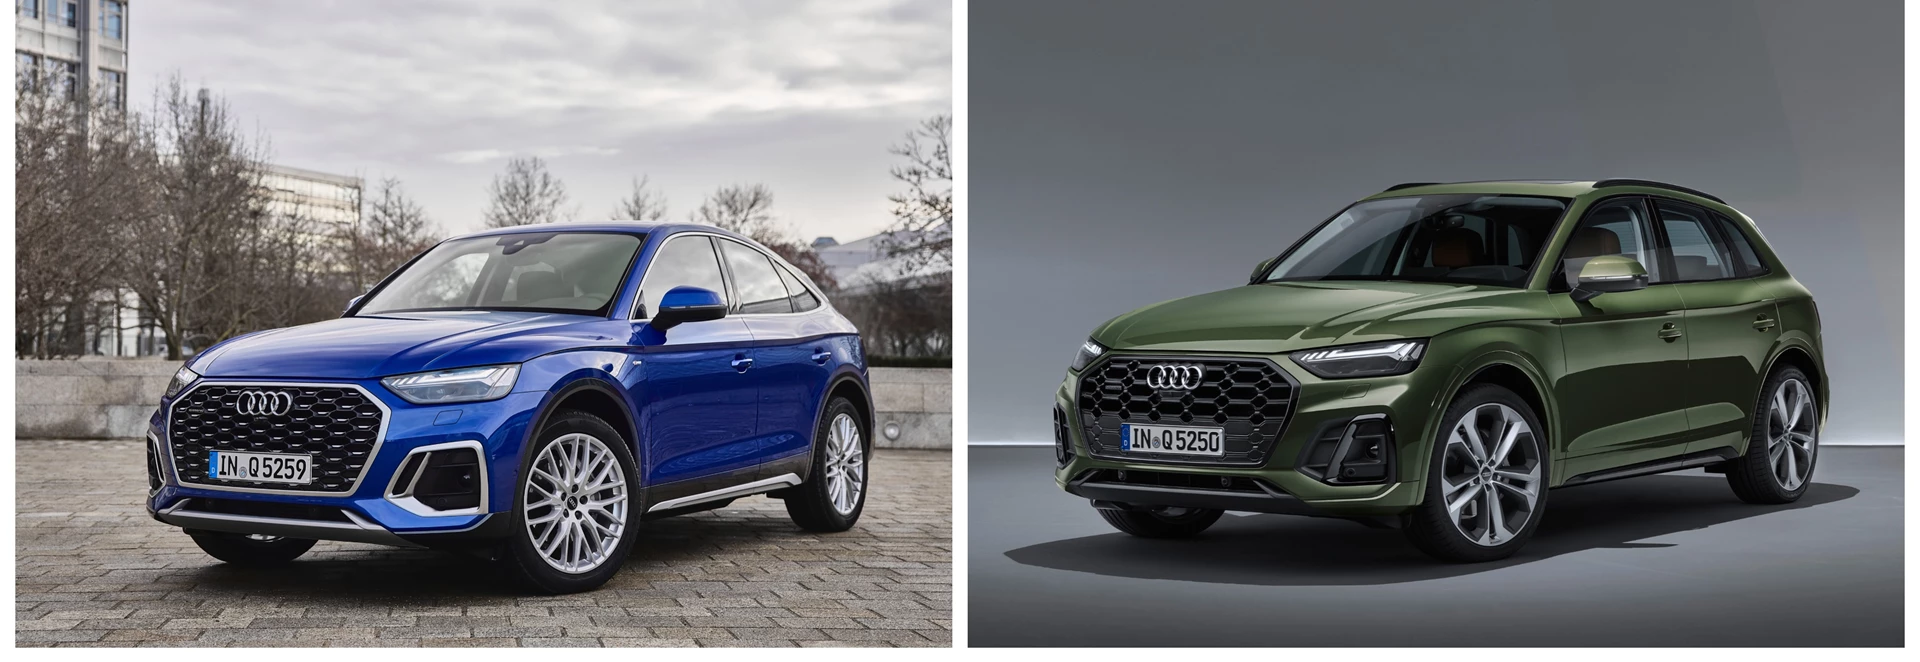 Audi Q5 vs Audi Q5 Sportback: Which should you choose? 